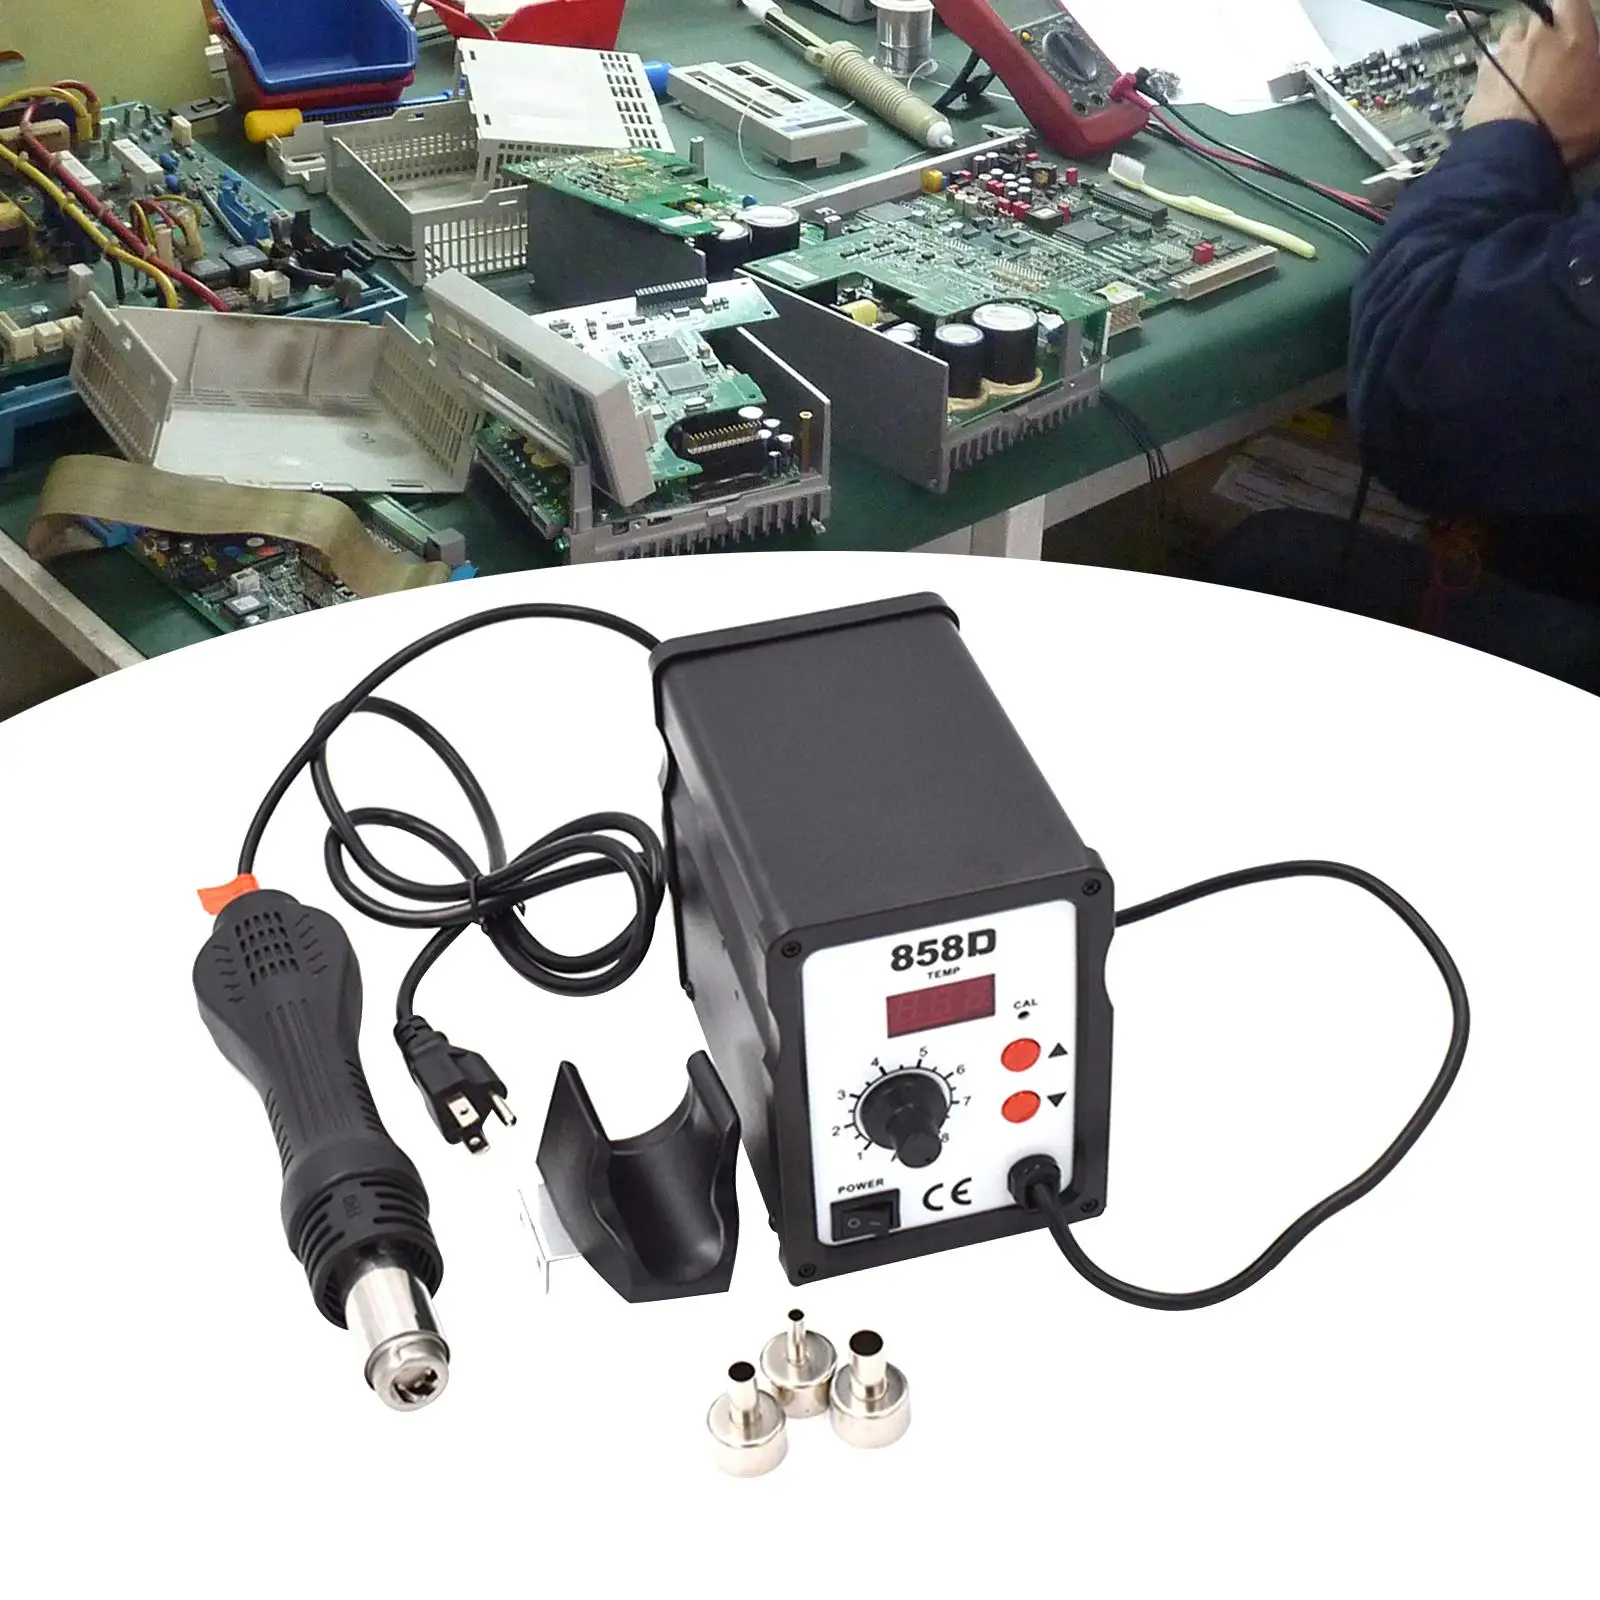 Digital Soldering Station Hot Air Reflow Adjustable Soldering for Maintenance Electric Appliance Circuit Boards Phone Repairing